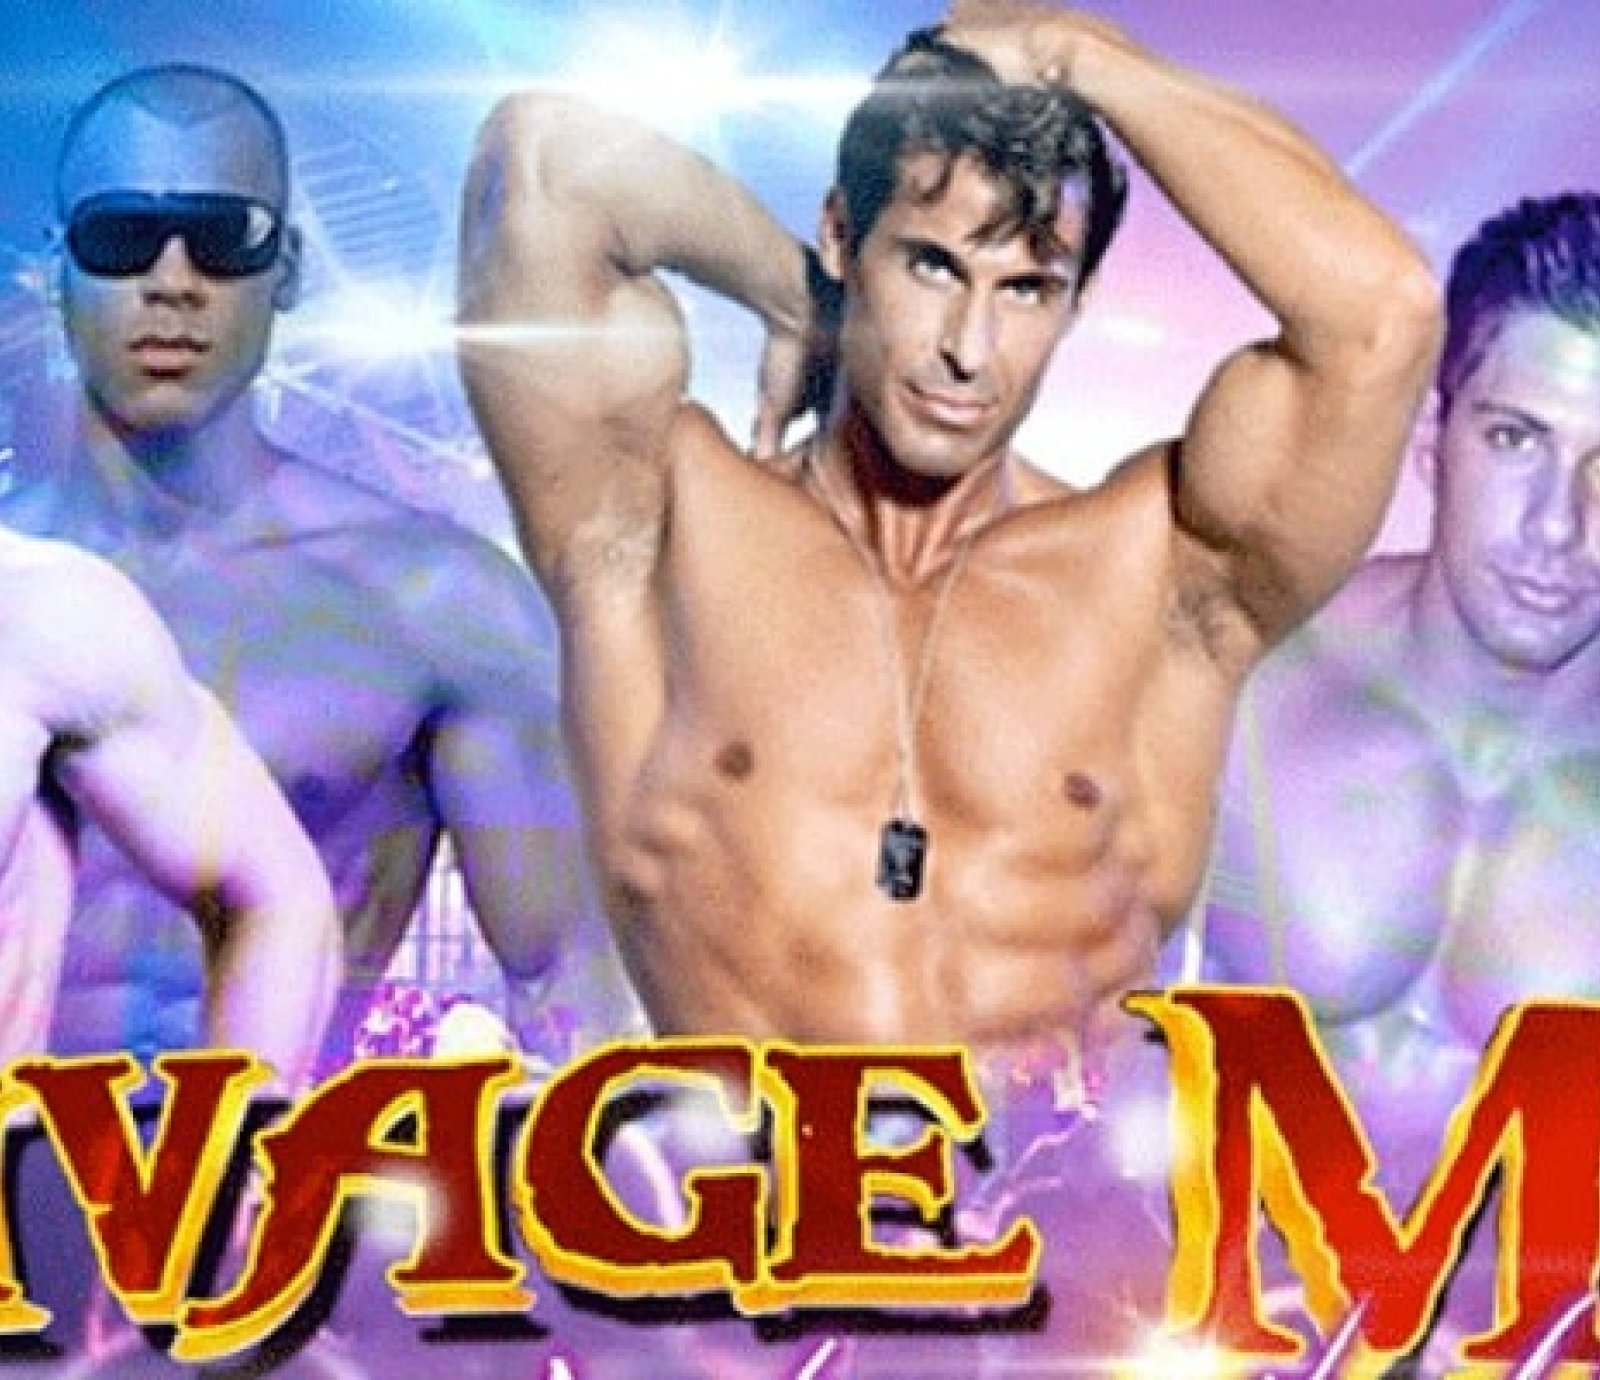 Savage Men Male Revue - Austin